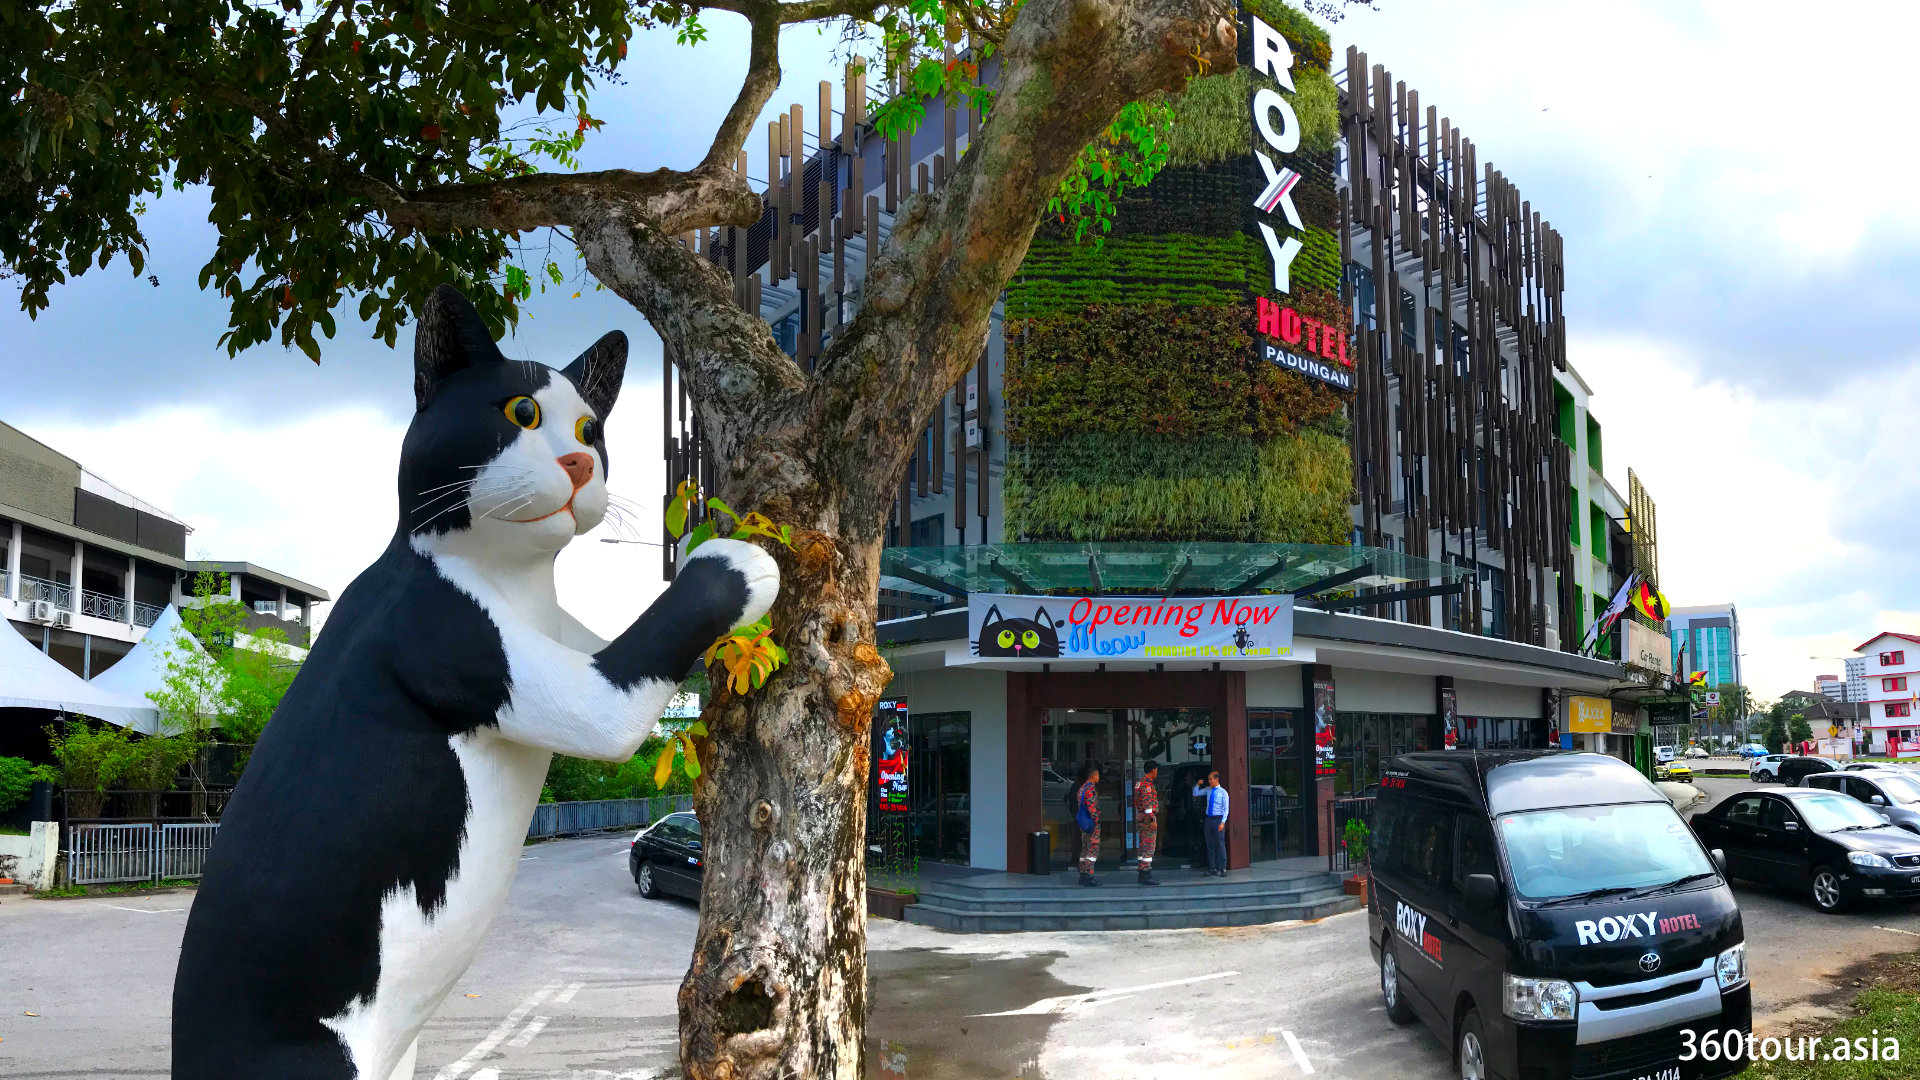 The Cat statue by the Tree at Roxy Hotel Padungan, Kuching | 360Tour.Asia